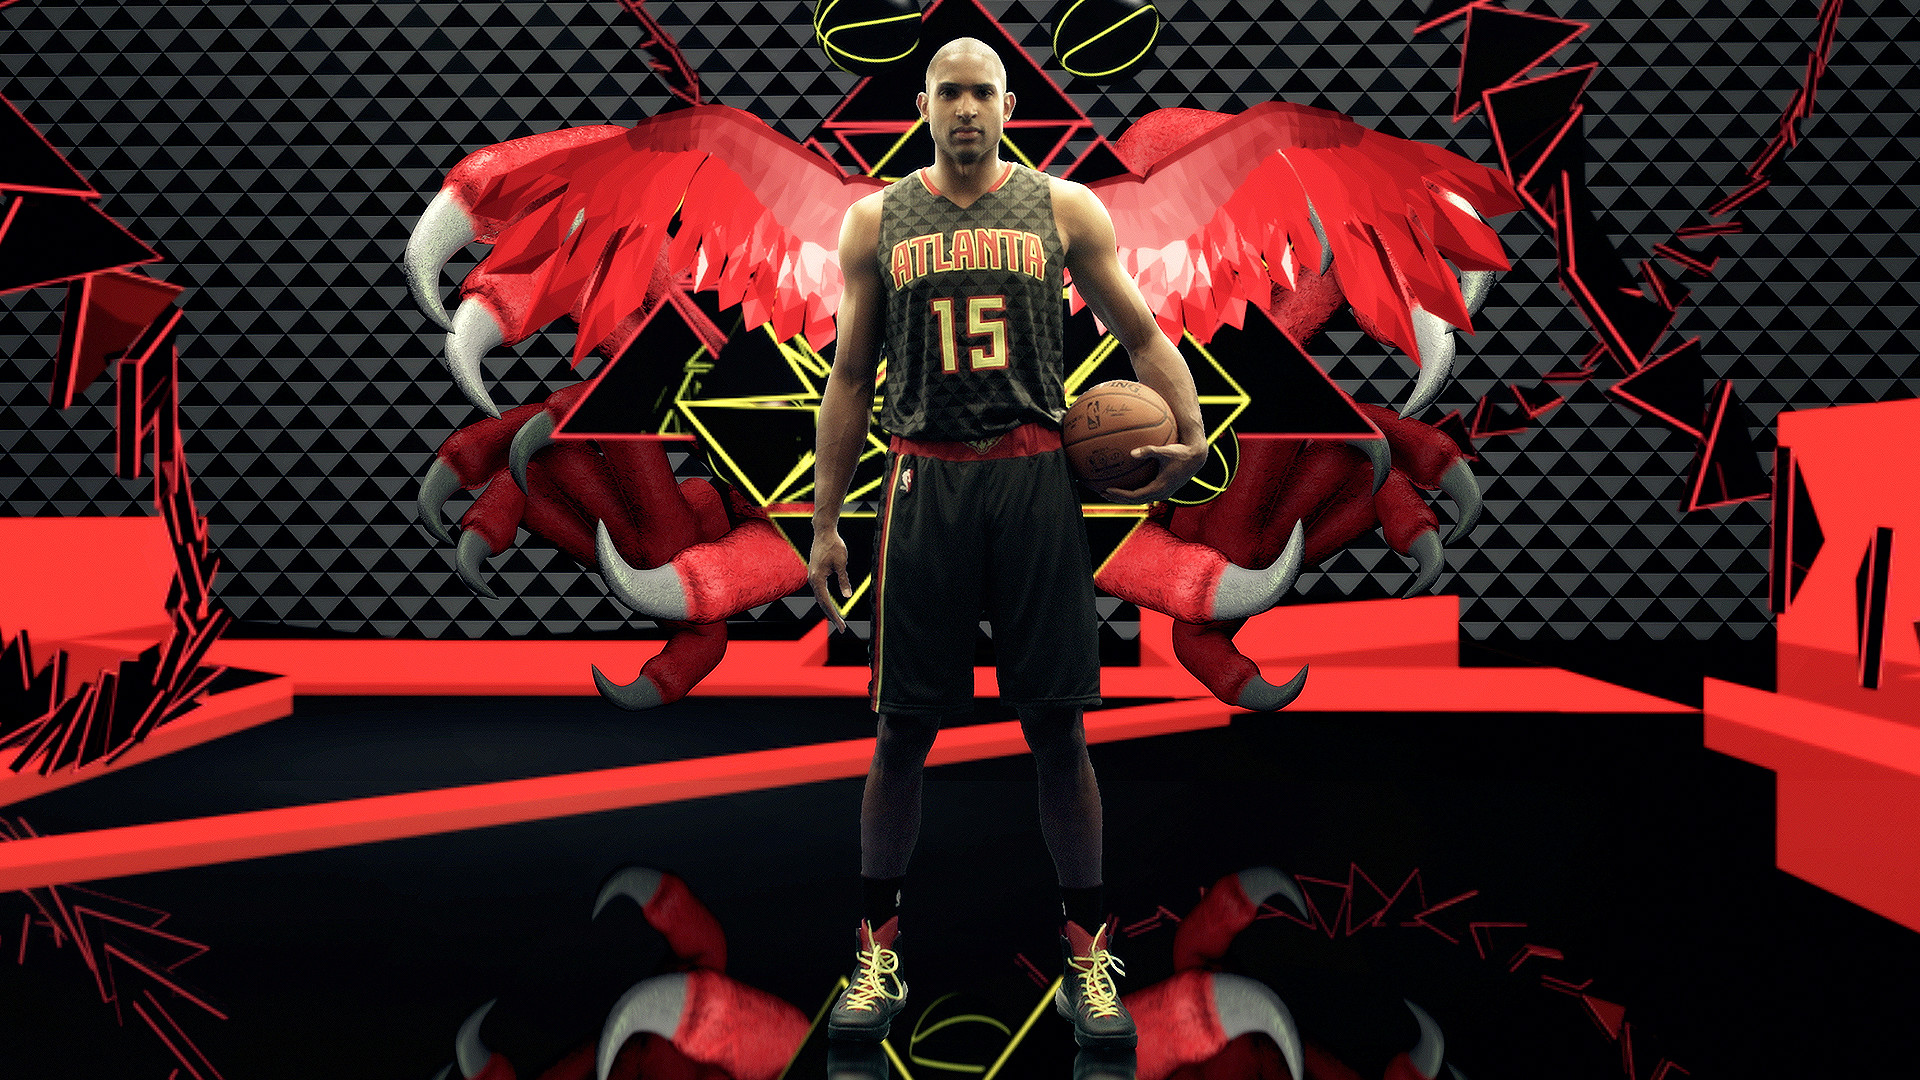 Wallpaper wallpaper sport logo basketball NBA Atlanta Hawks images for  desktop section спорт  download